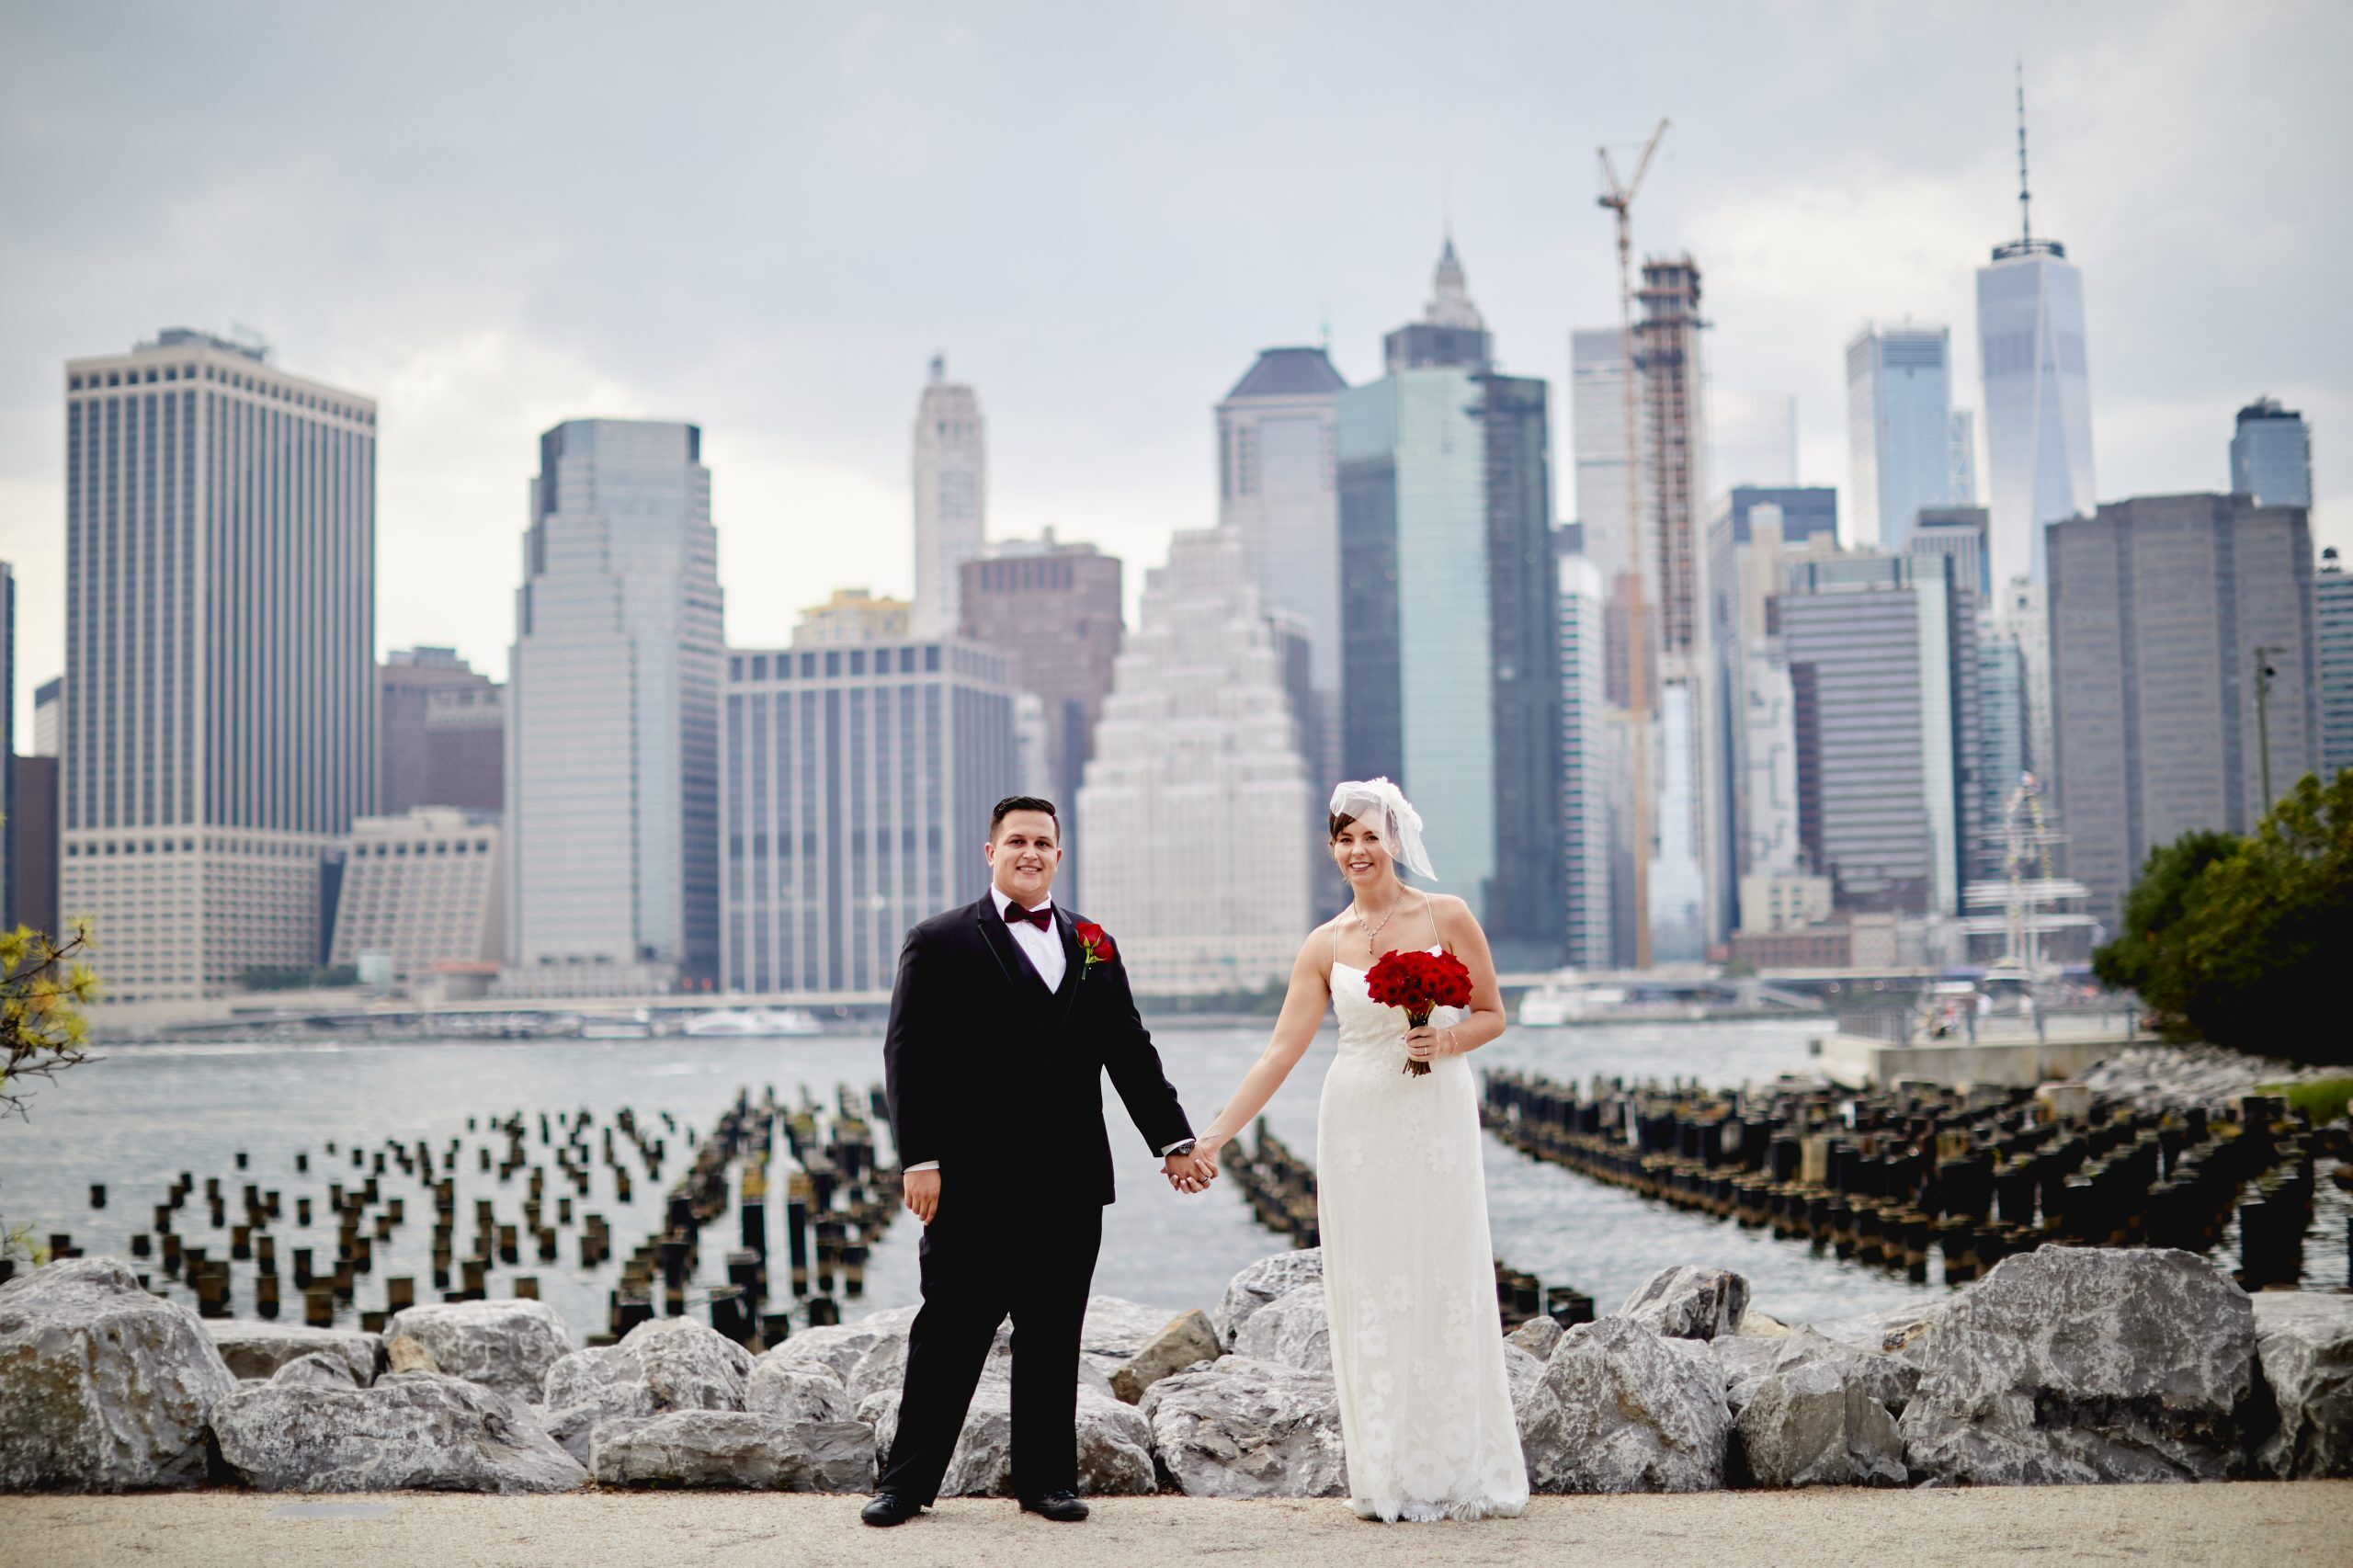 Brooklyn Bridge Park, elopement venue in 